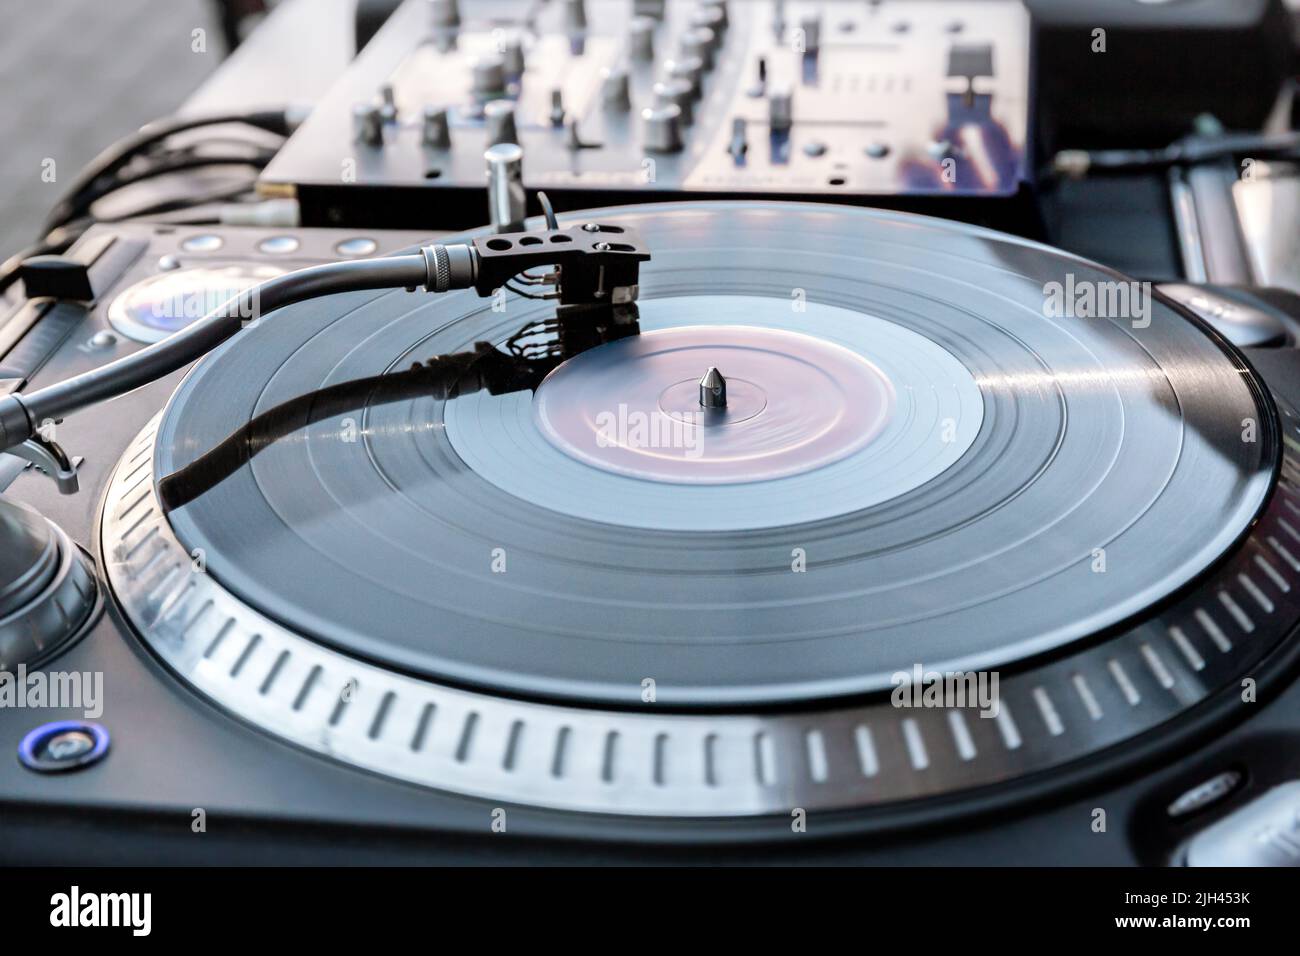 turntable vinyl record player. analog audio equipment for professional disc jockey. Stock Photo